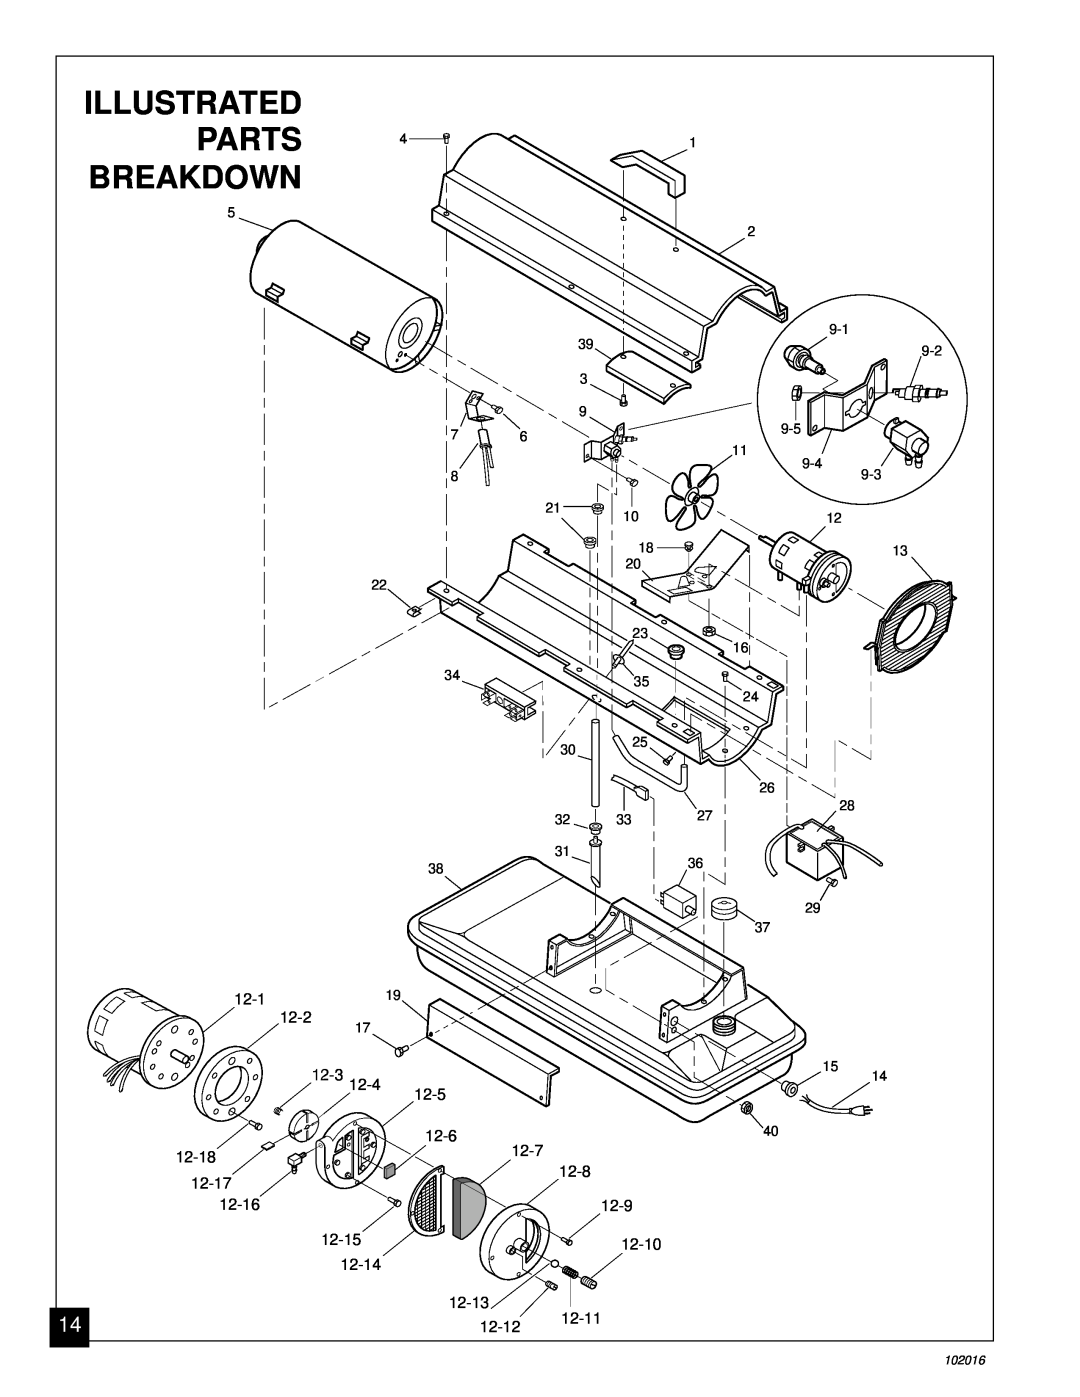 Desa REM50B, B50G owner manual Parts, Breakdown, Illustrated 